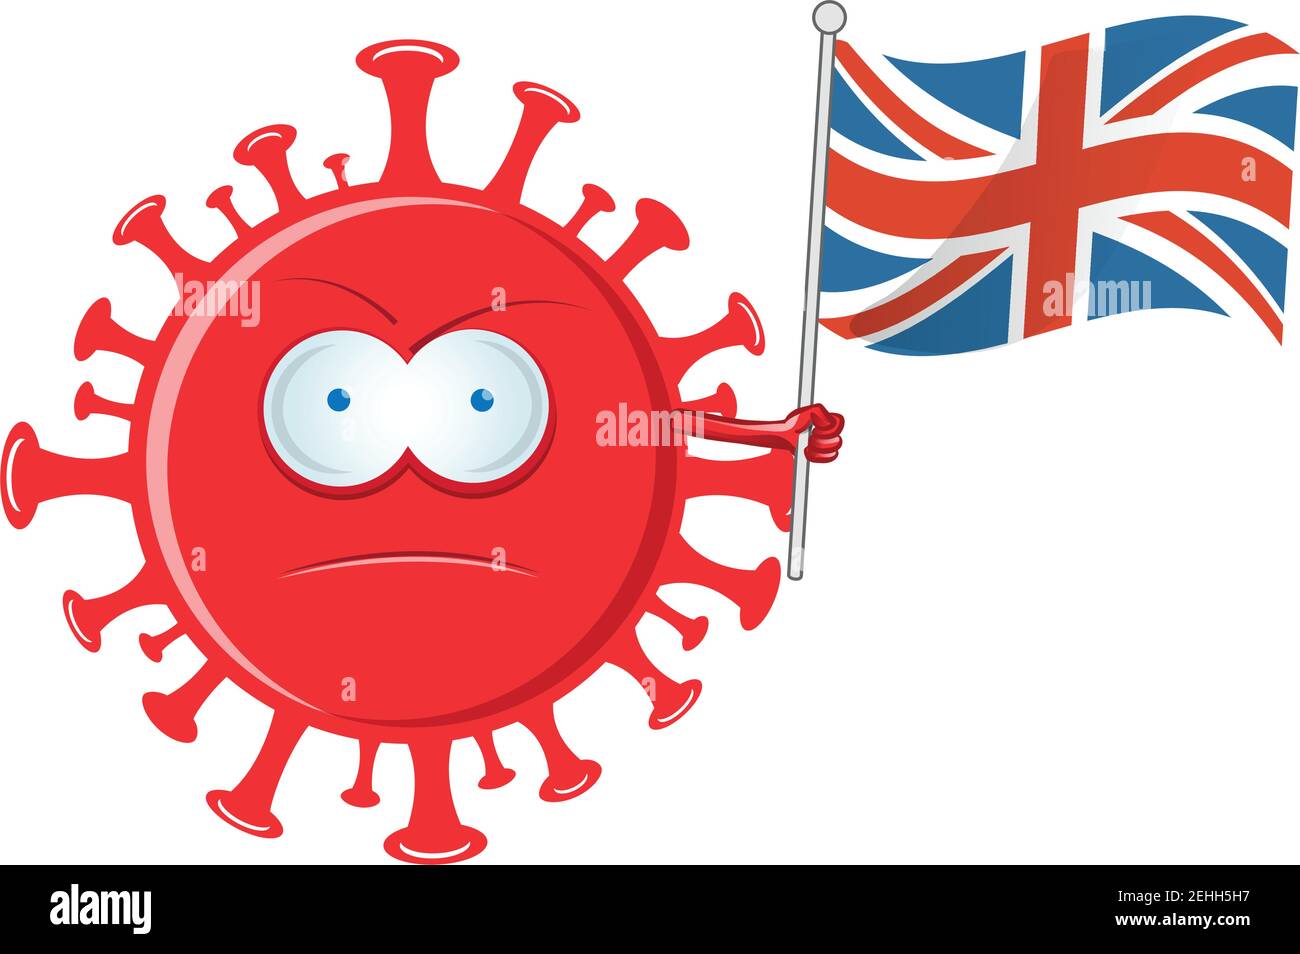 coronavirus character cartoon with flag england. vetcor illustration Stock Vector